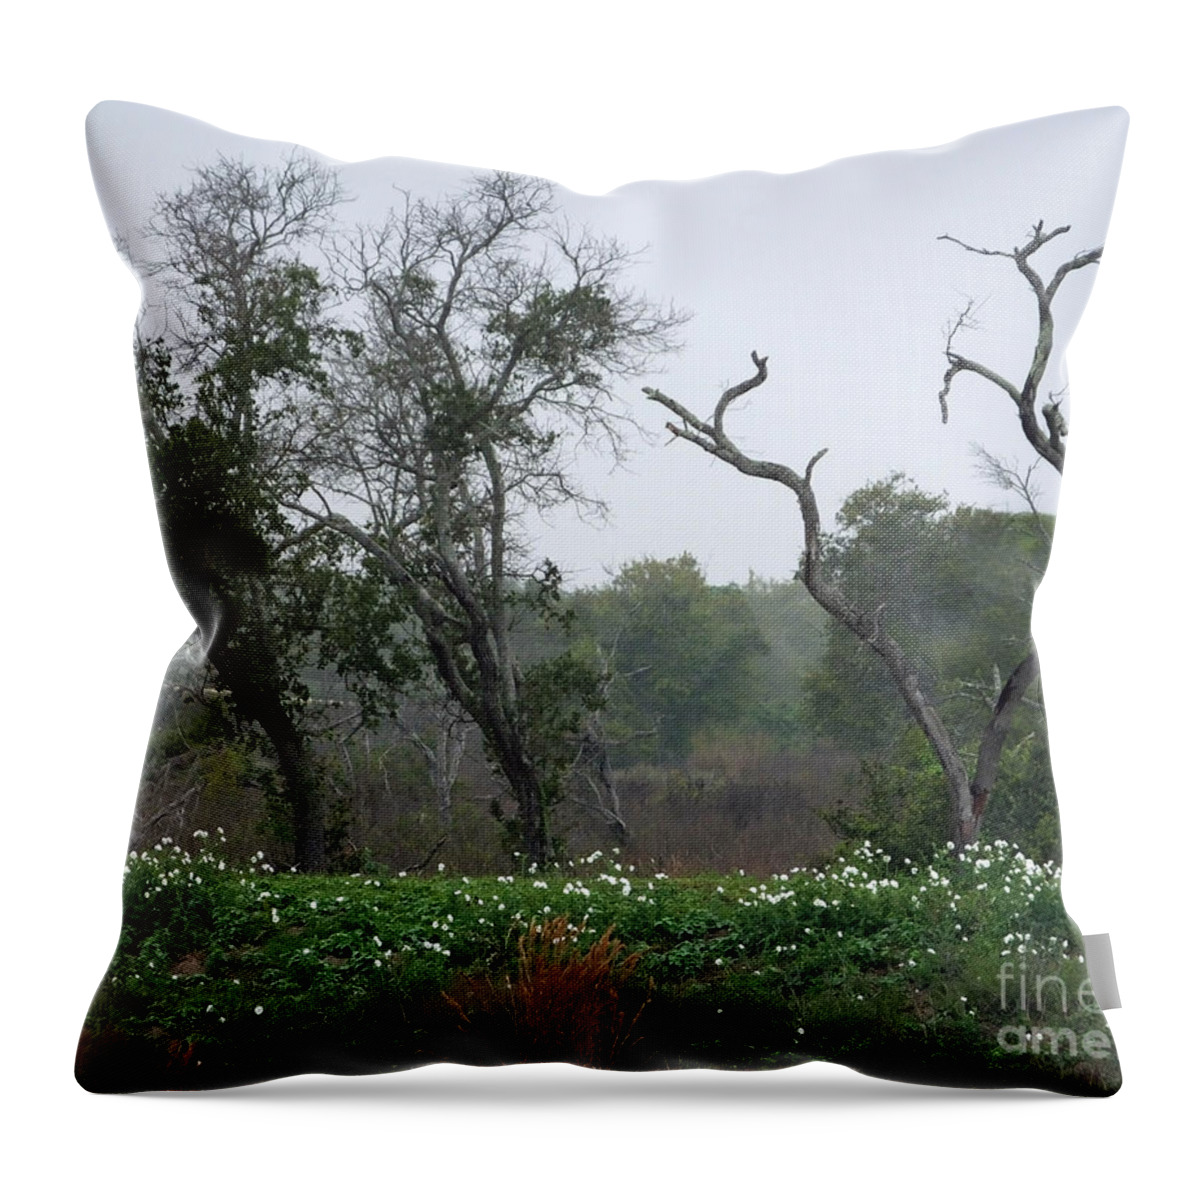 Texas Throw Pillow featuring the photograph Aransas NWR Landscape by Lizi Beard-Ward